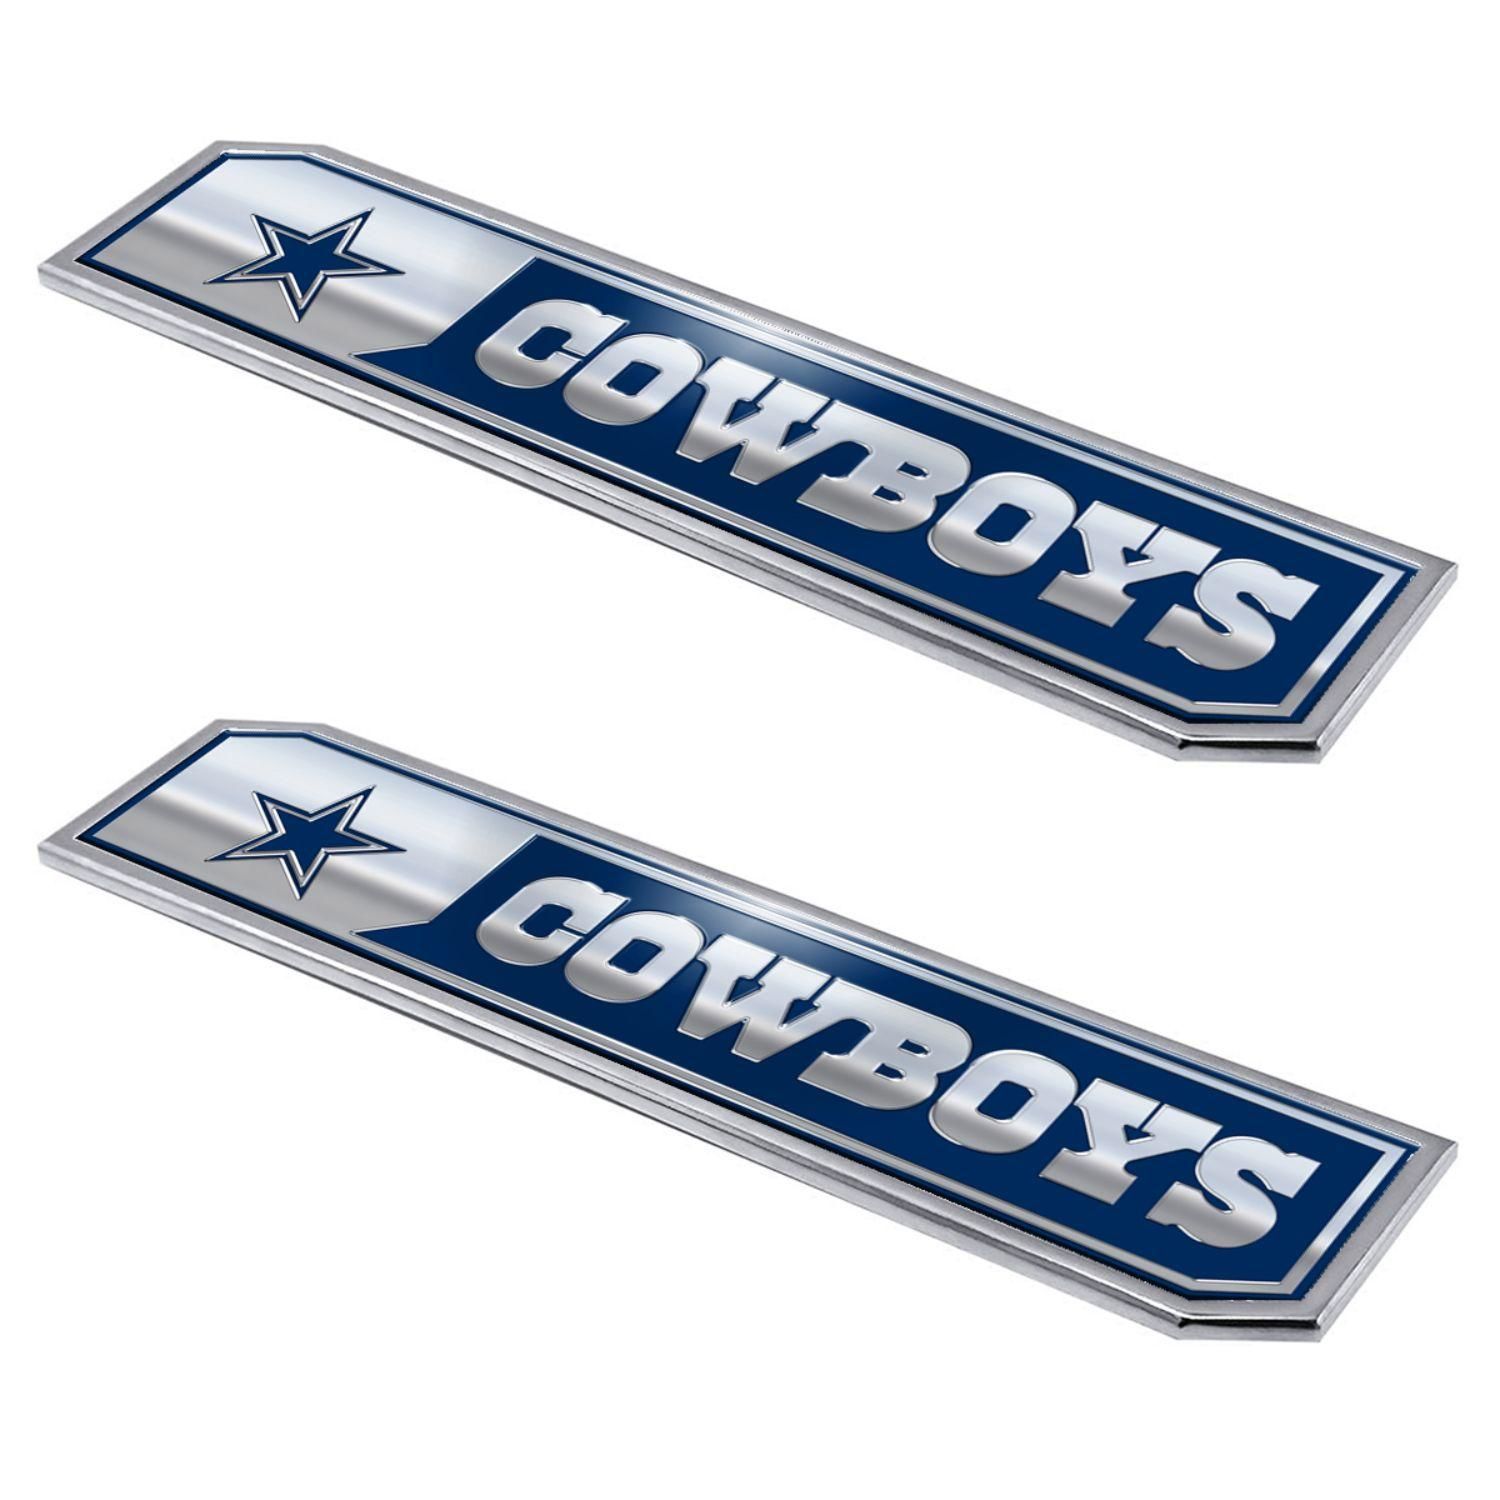 FANMATS Dallas Cowboys Truck Emblem Set 2 Pack